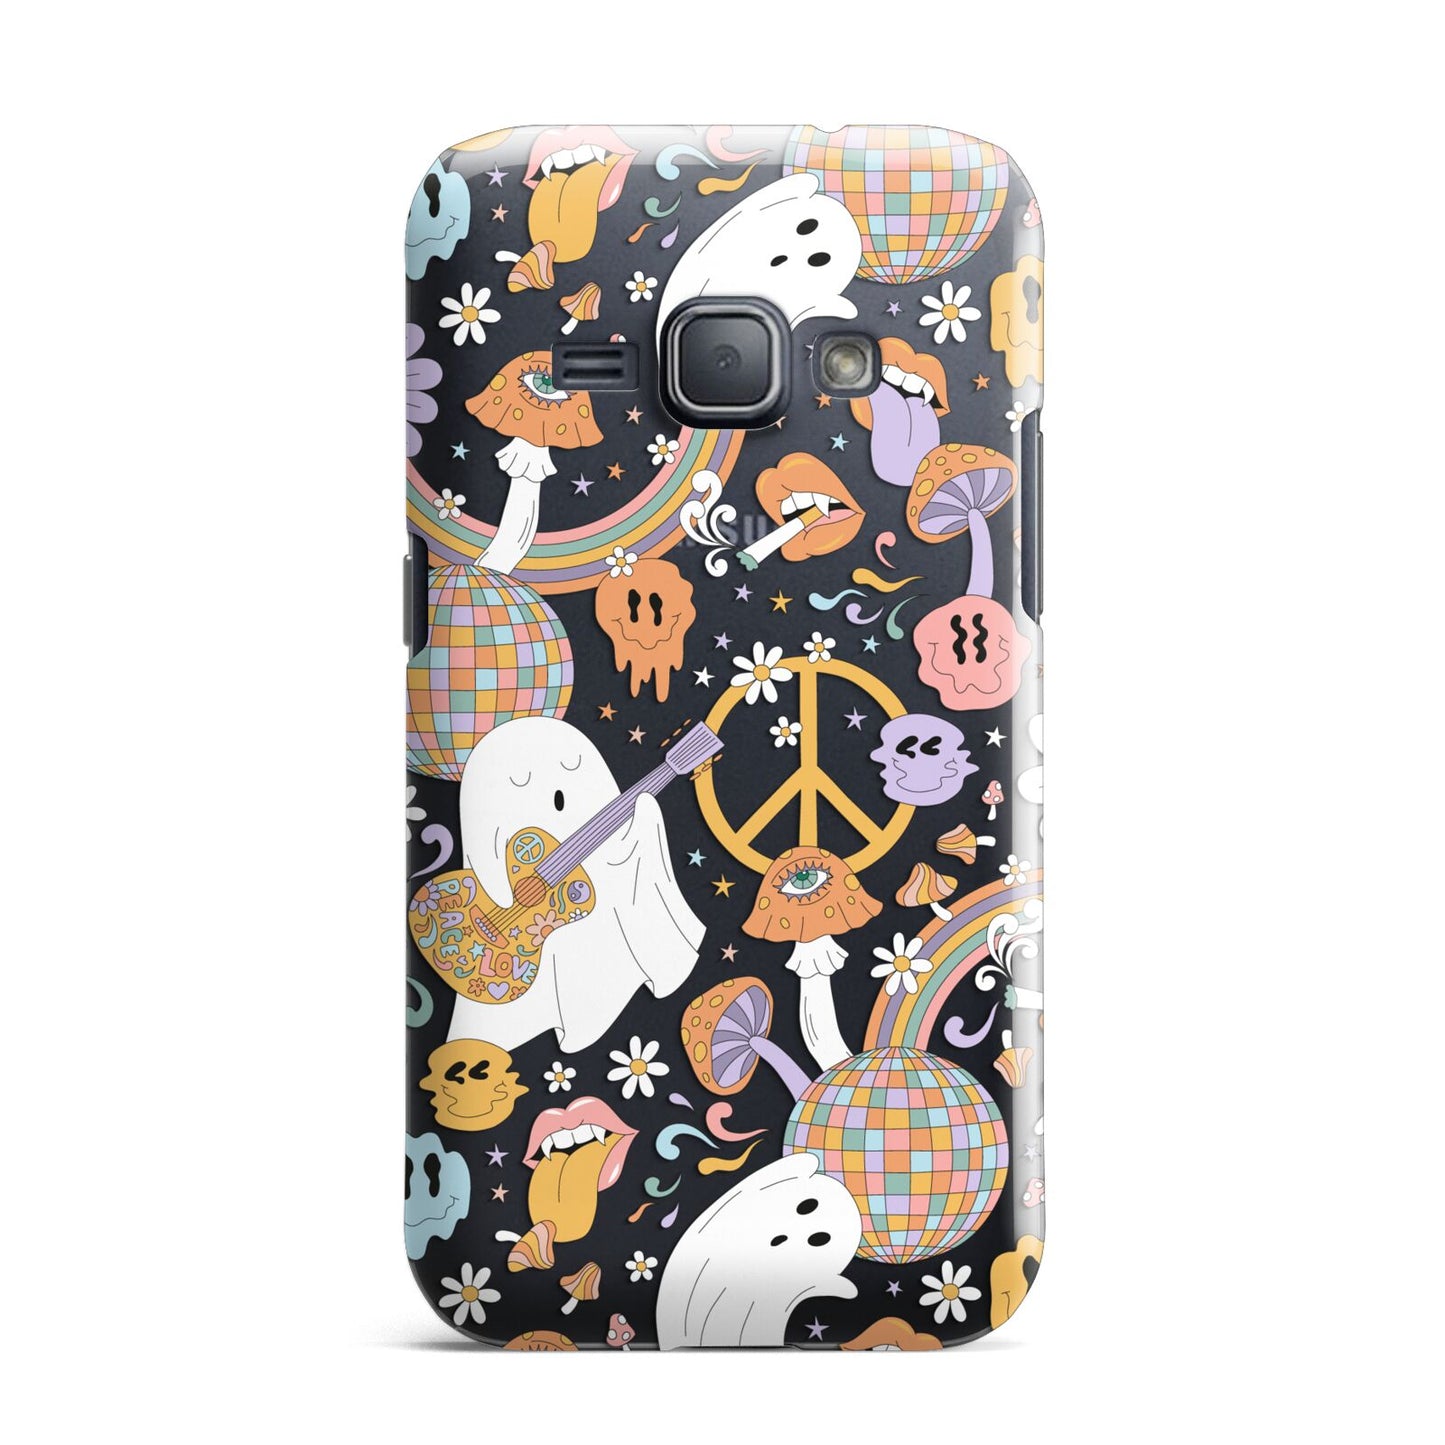 Disco Ghosts Samsung Galaxy J1 2016 Case